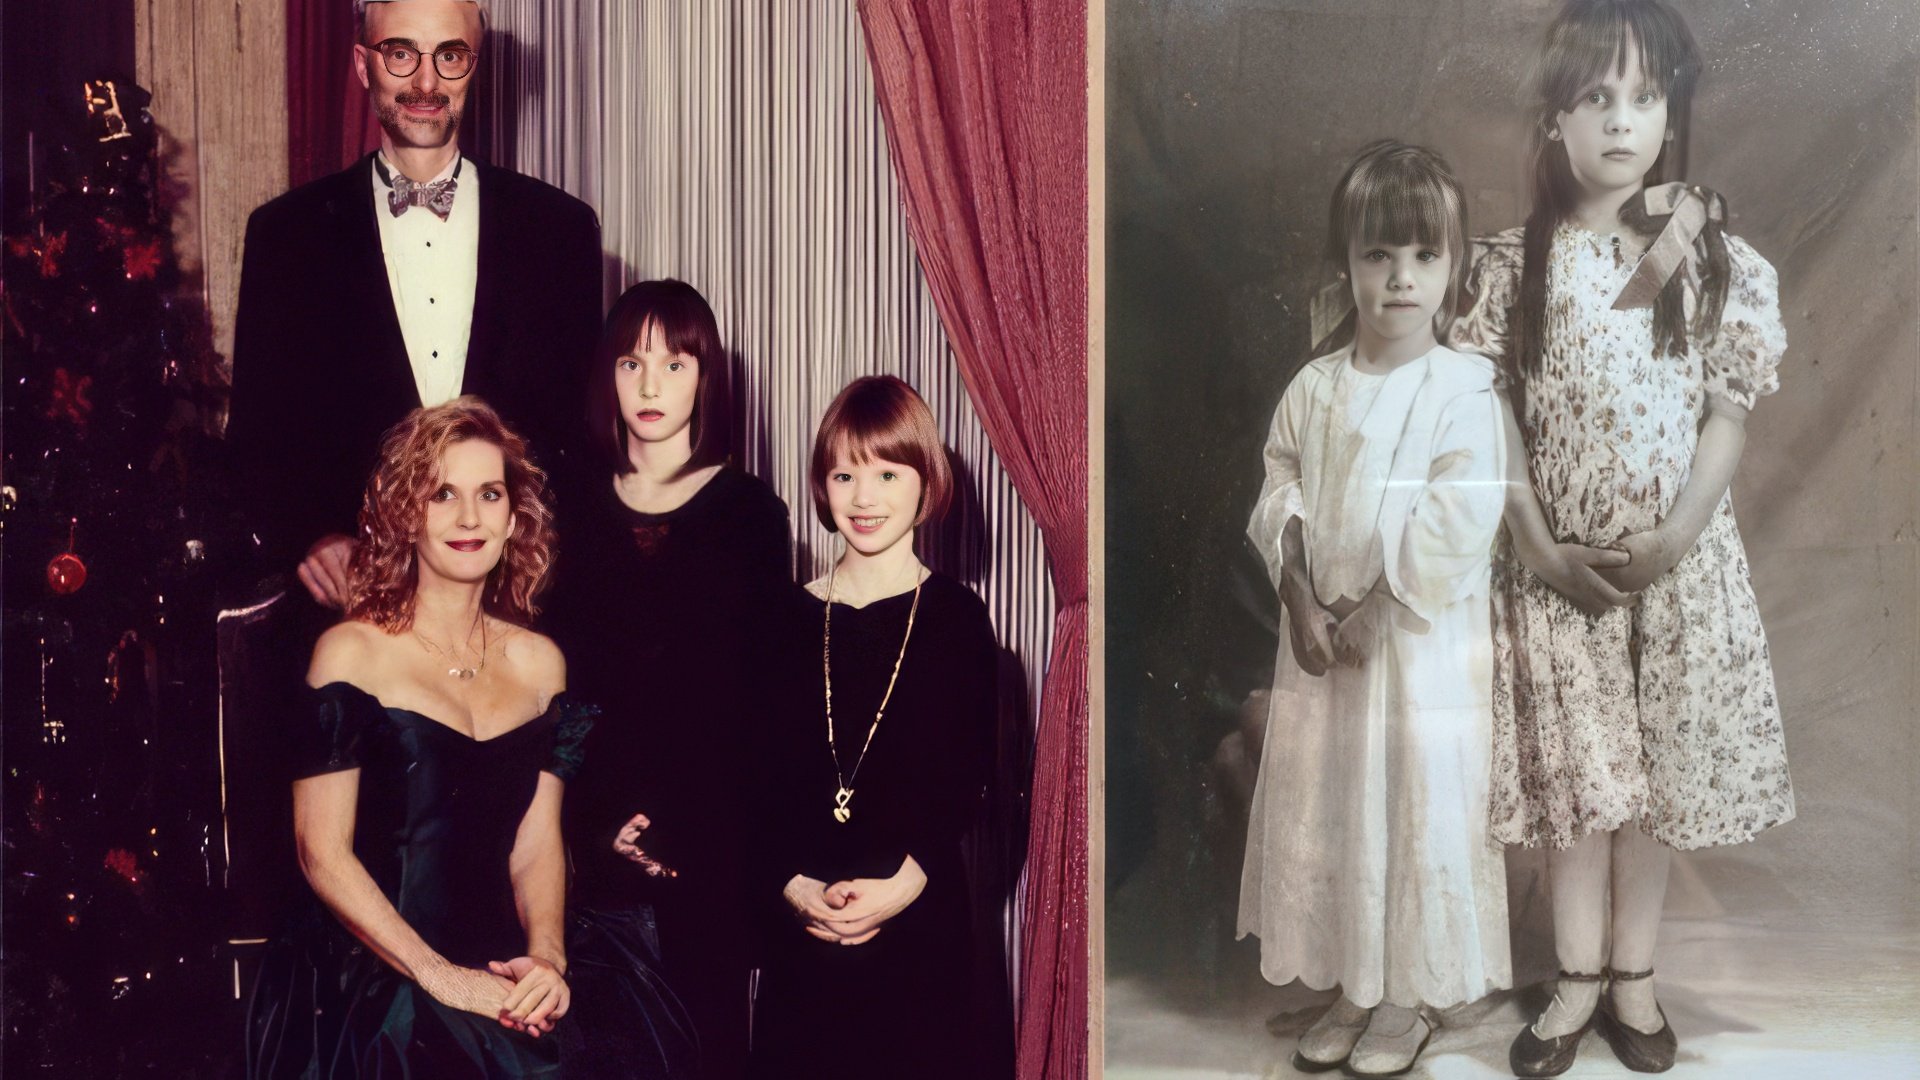 Mackenzie Davis as a child with her family